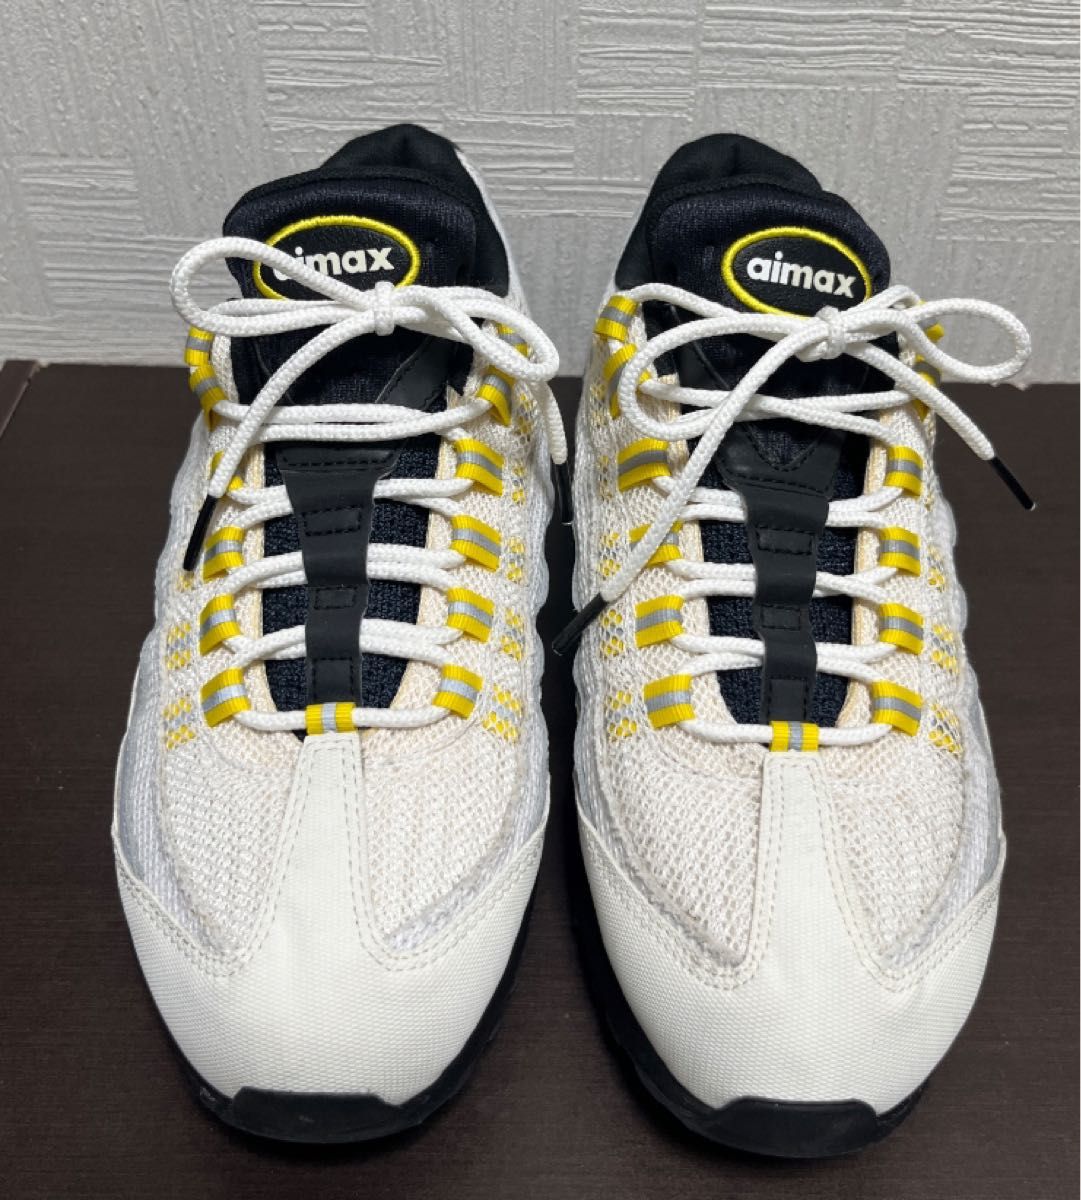 Nike Air Max 95 Essential "White/Tour Yellow/Black/Wolf Grey"